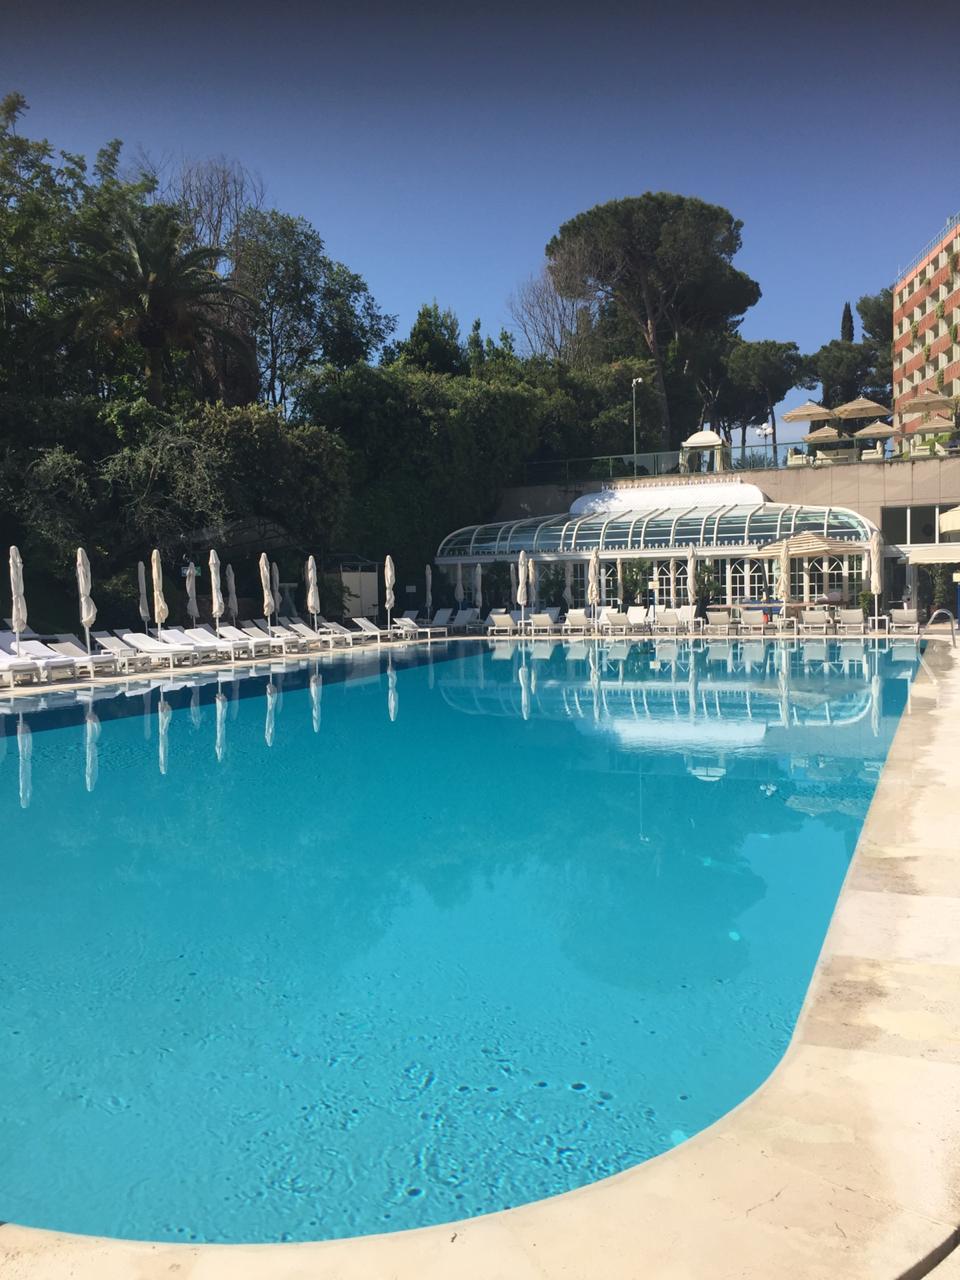 Outdoor swimming pool at Waldorf Astoria Cavalieri Hilton hotel 